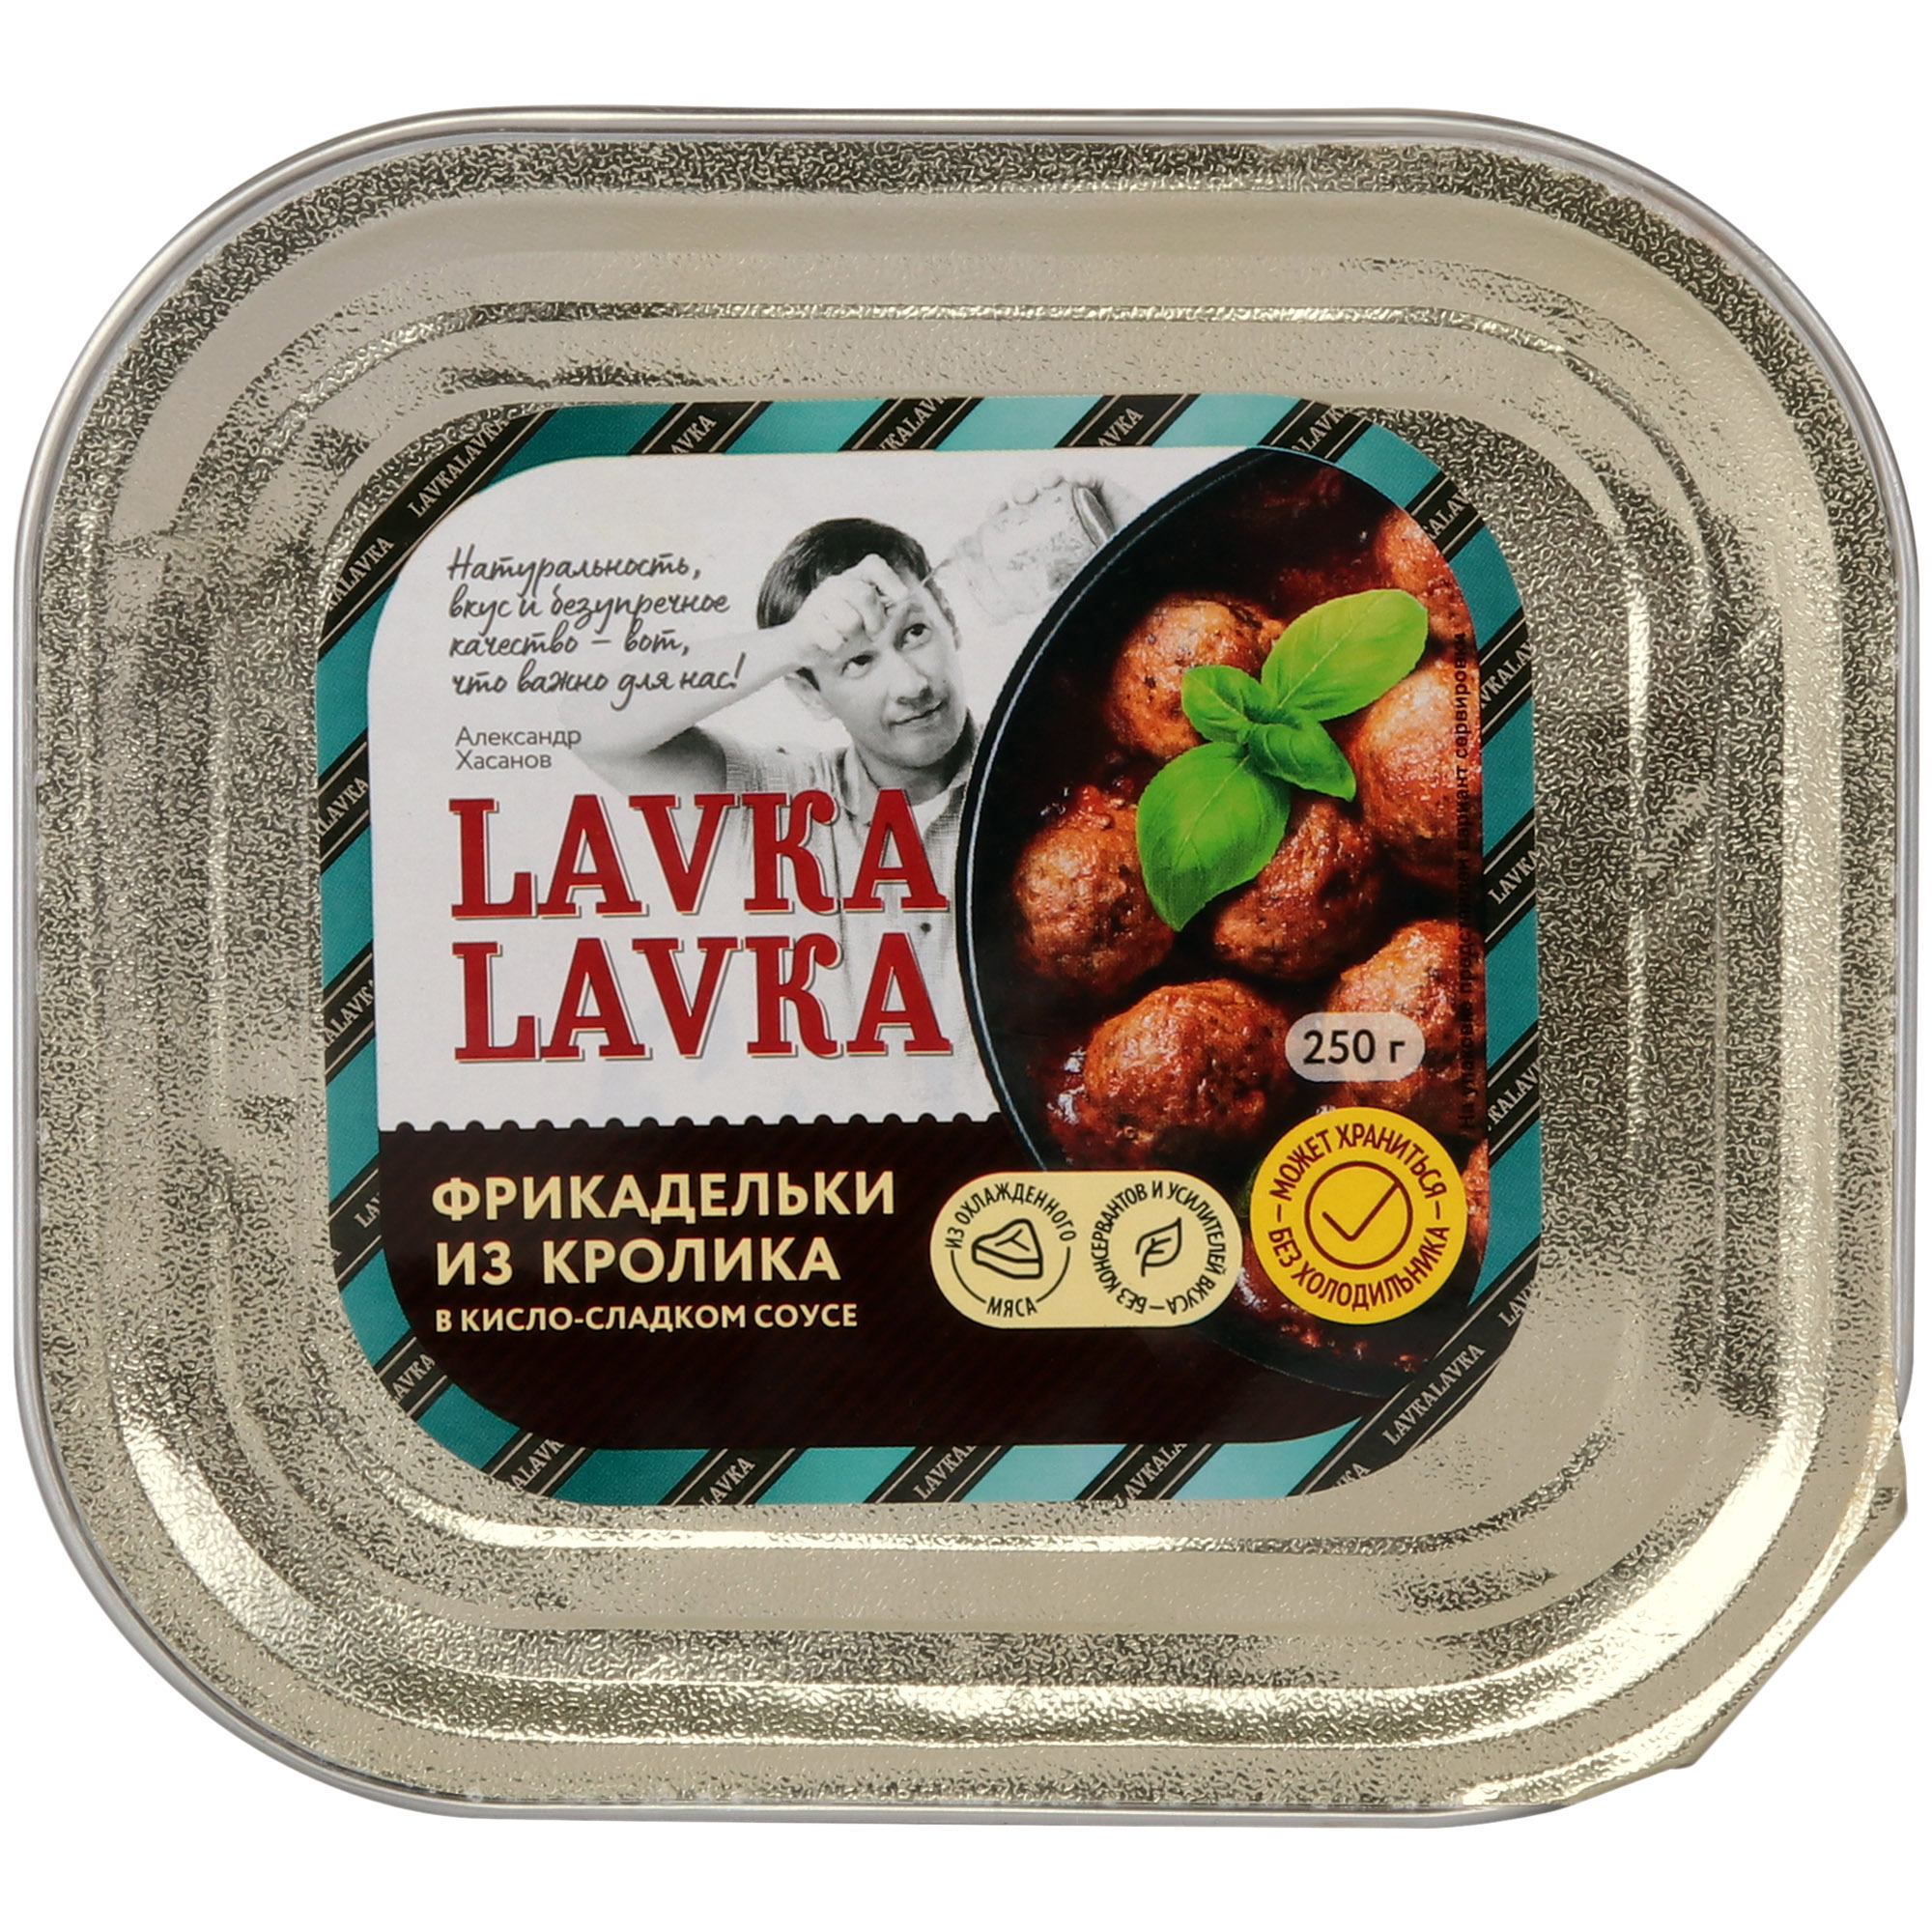 Фрикадельки LavkaLavka из кролика, 250 г суп lavkalavka солянка 350 г